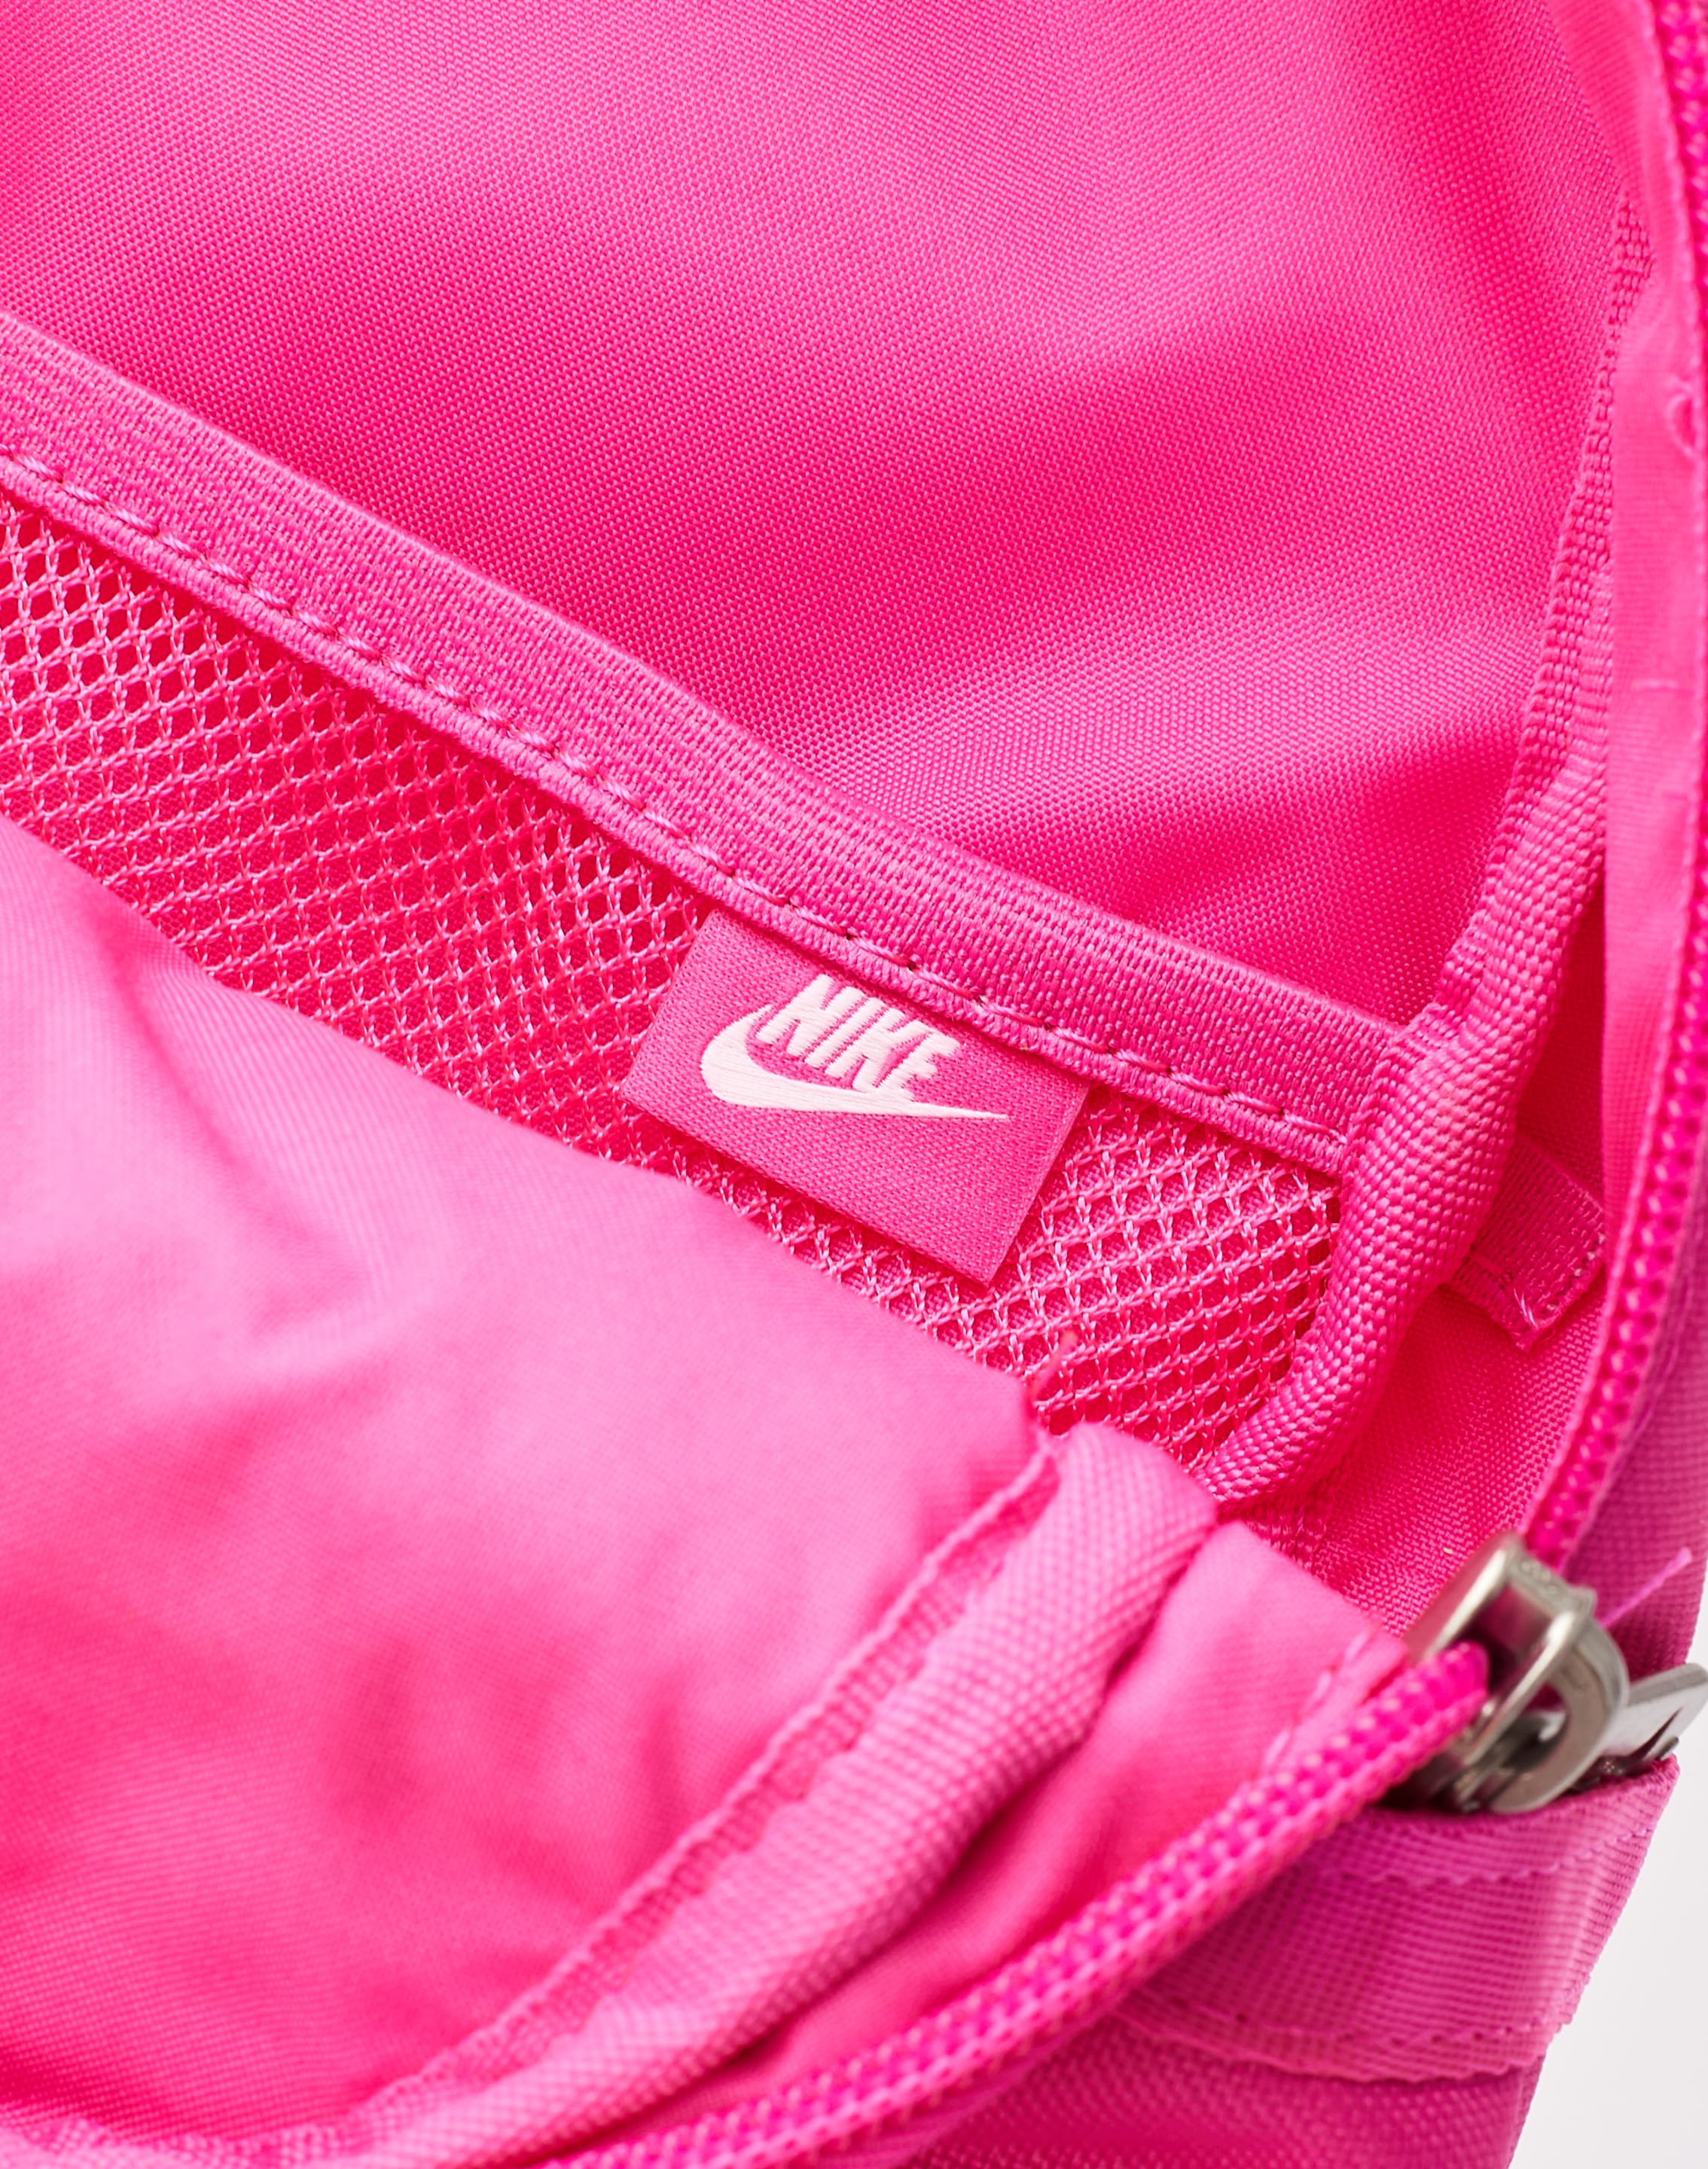 Nike Futura Mini Backpack - Free Shipping